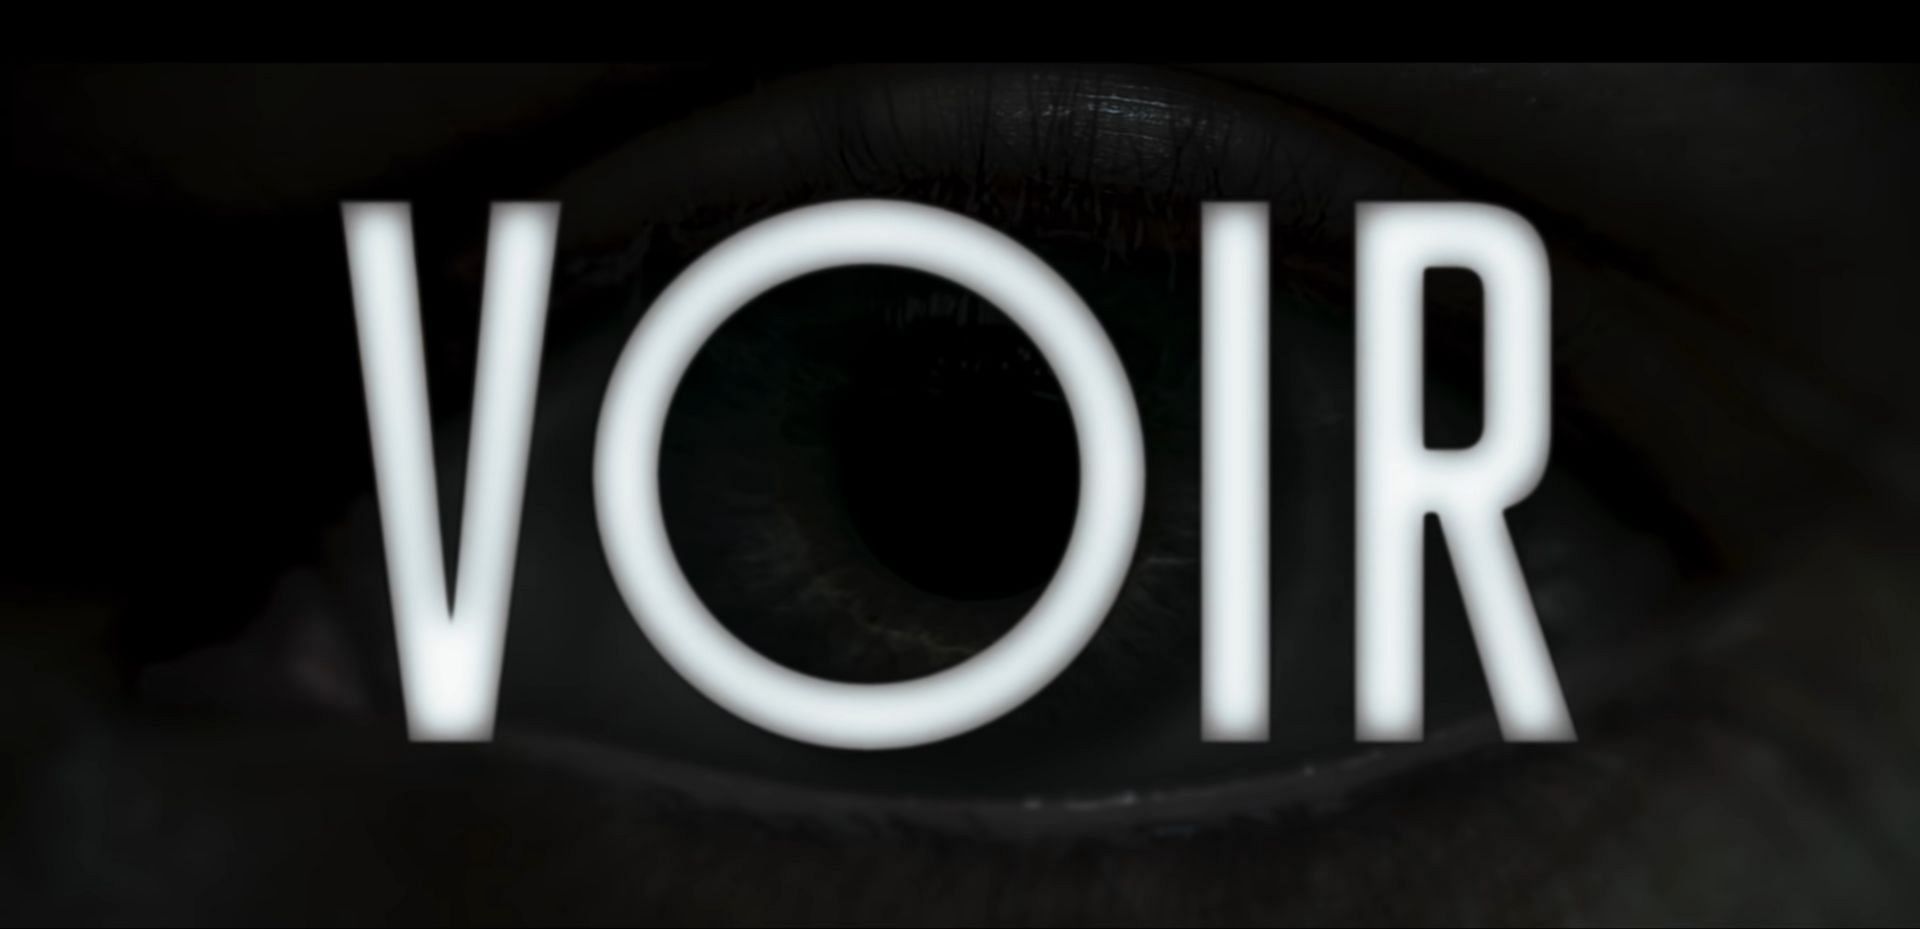 Voir Season 1 (Image via Netflix)